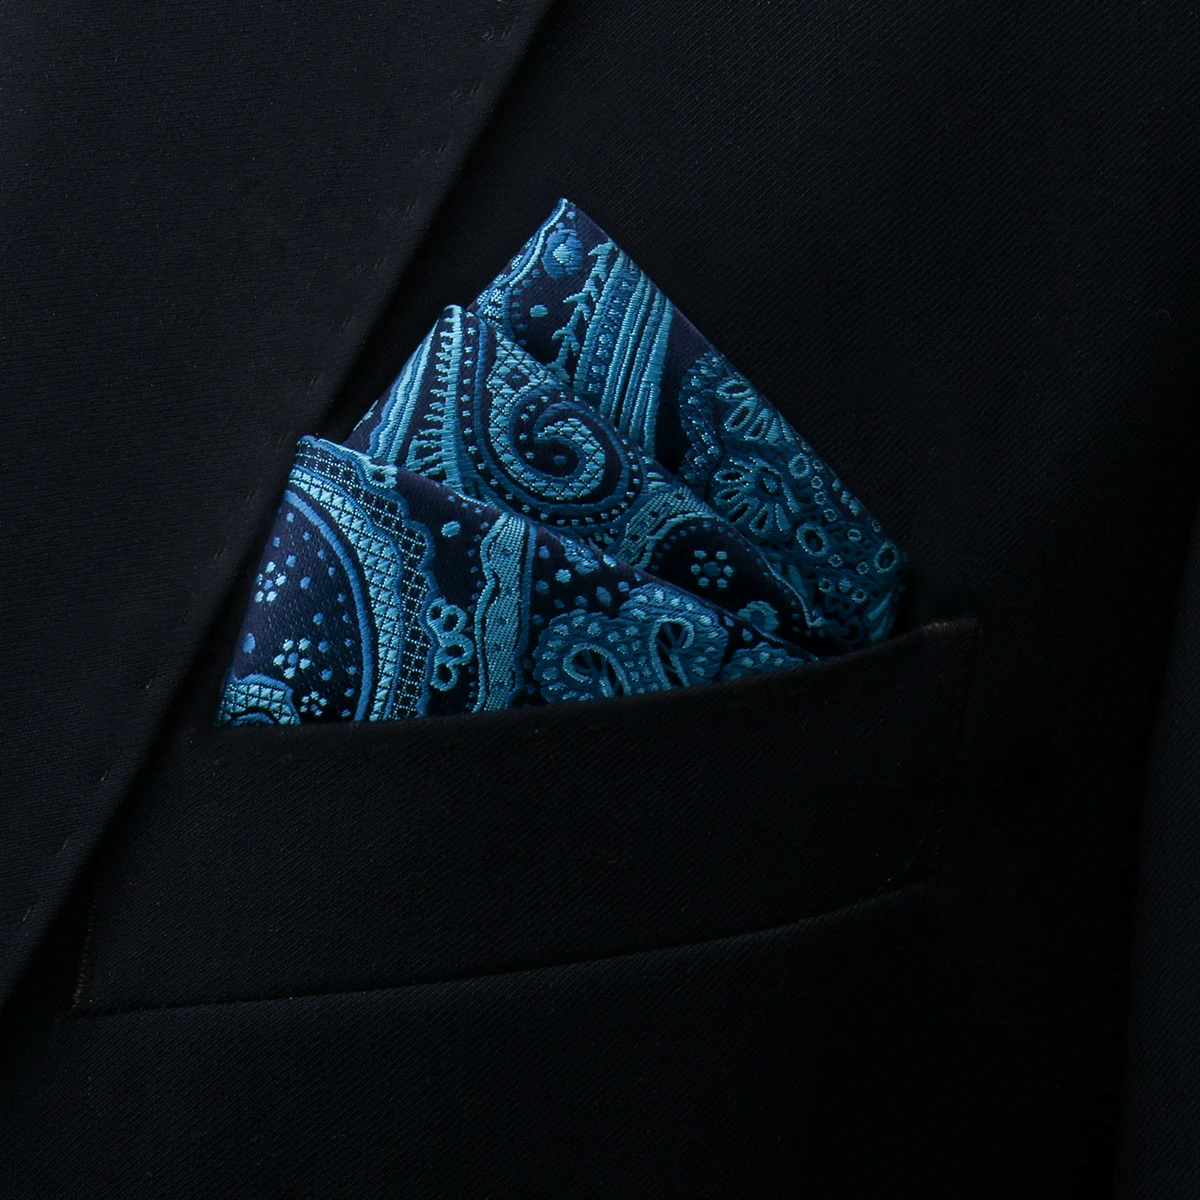 Brand Kerchief Man Dark Blue Striped April Fool's Day Fit Formal Party Pocket Square Handkerchiefs Suit Accessories Men Necktie